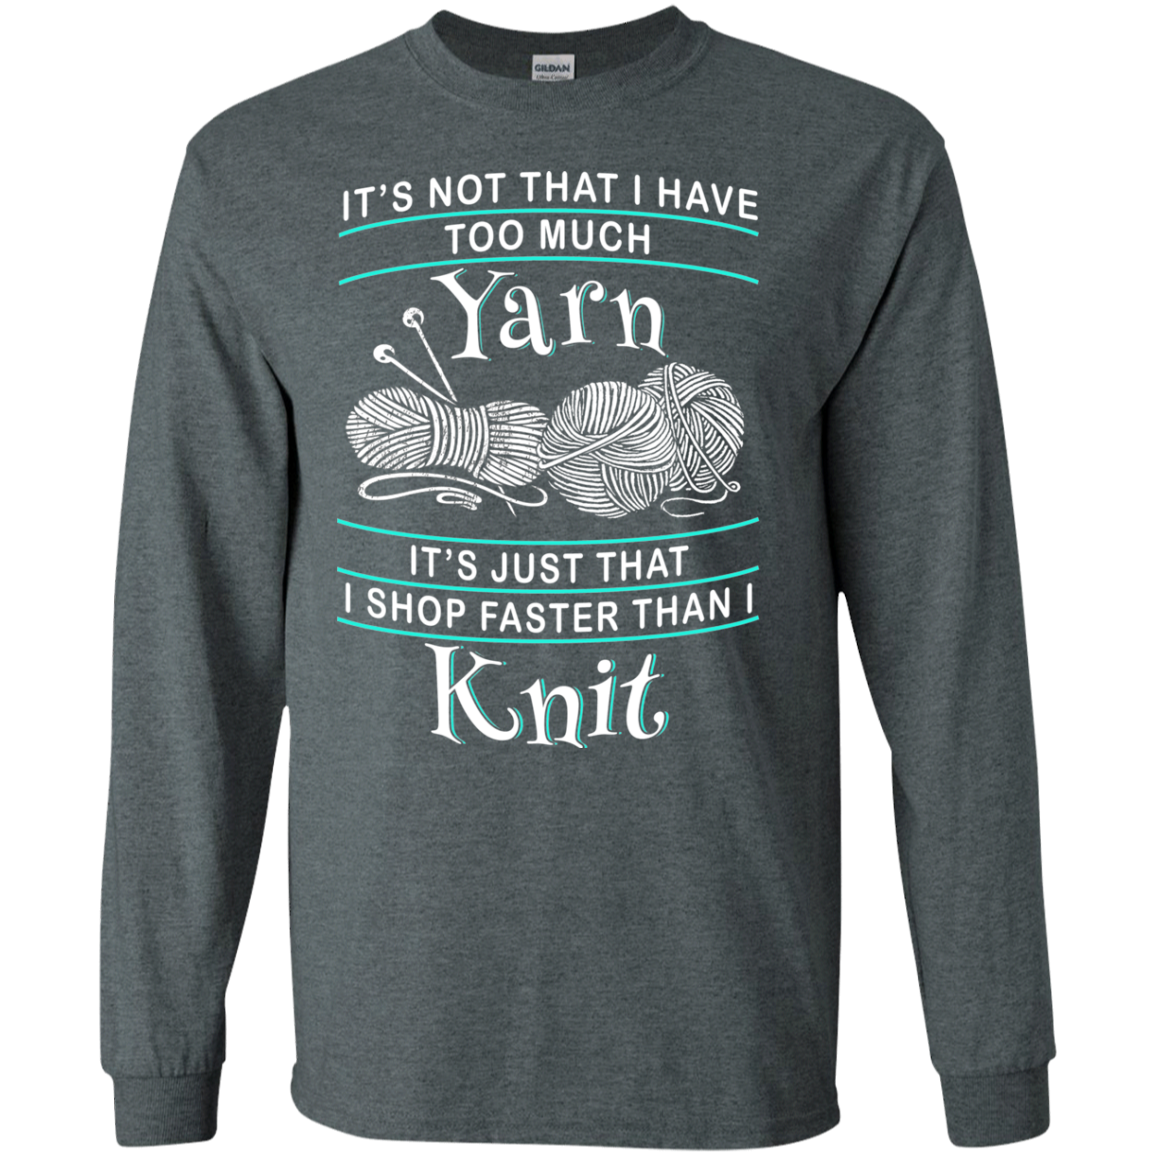 I Shop Faster than I Knit LS Ultra Cotton T-Shirt